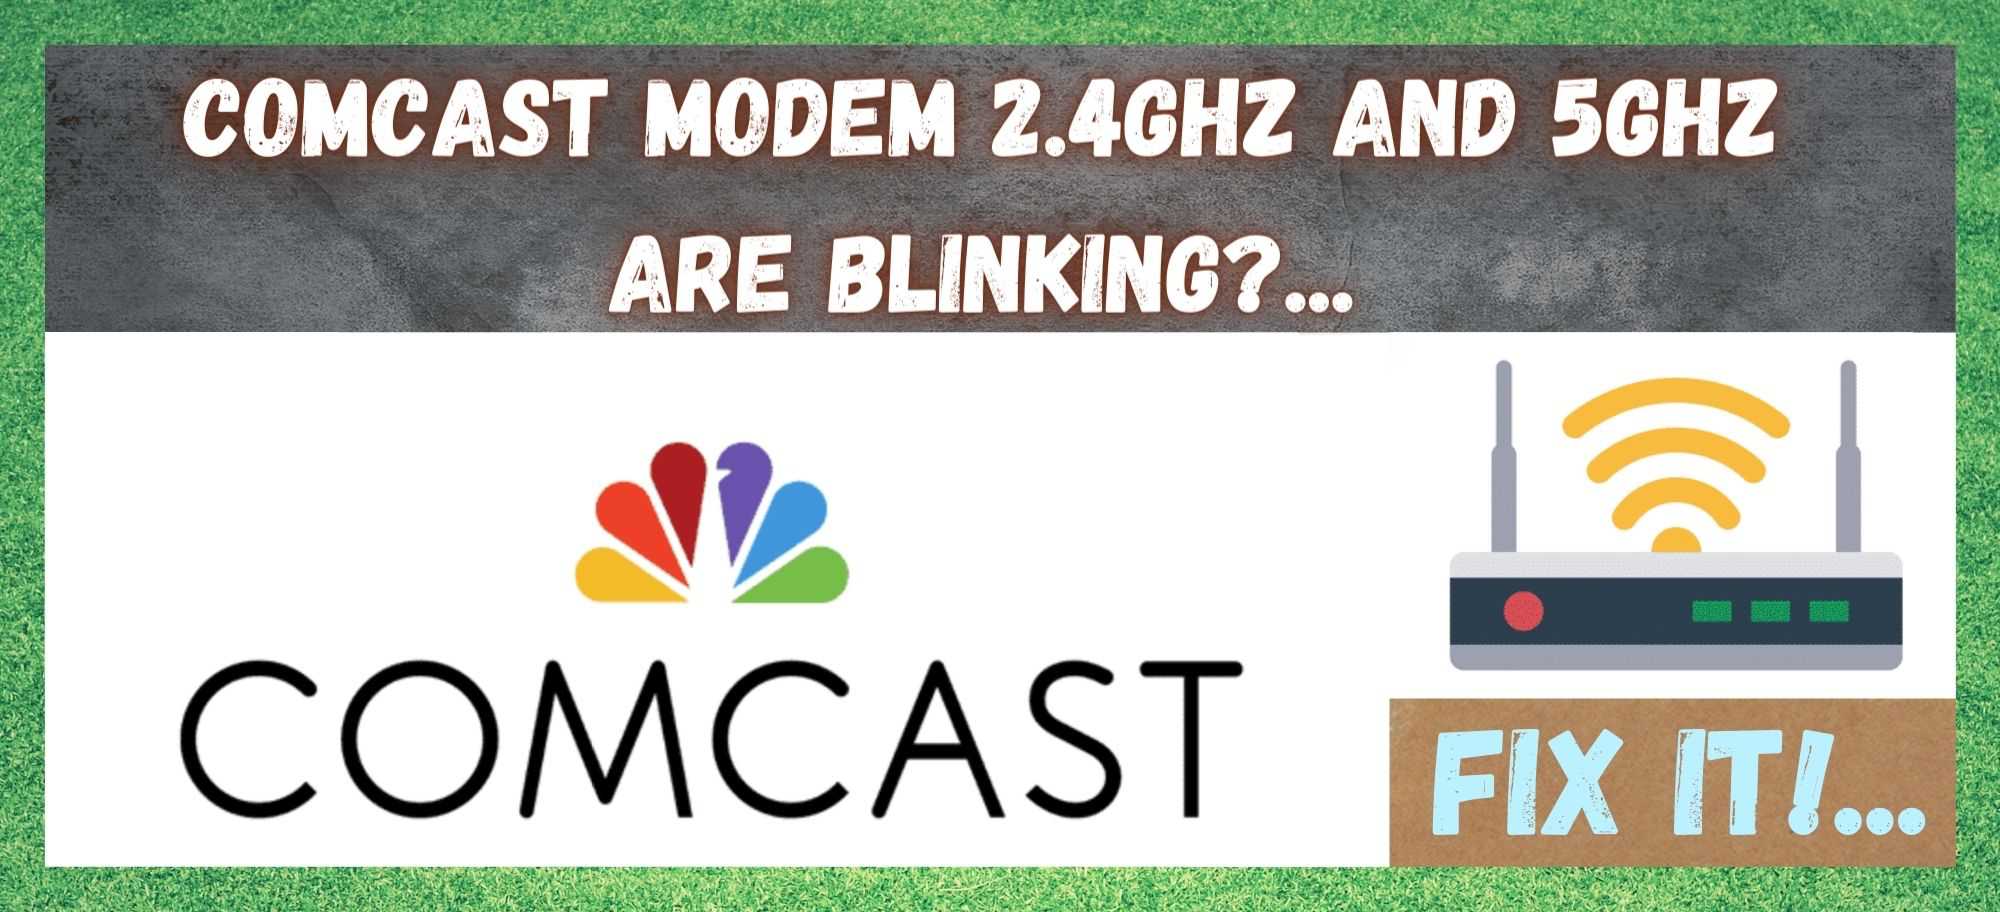 Comcast Modem 2.4GHz And 5GHz Blinking